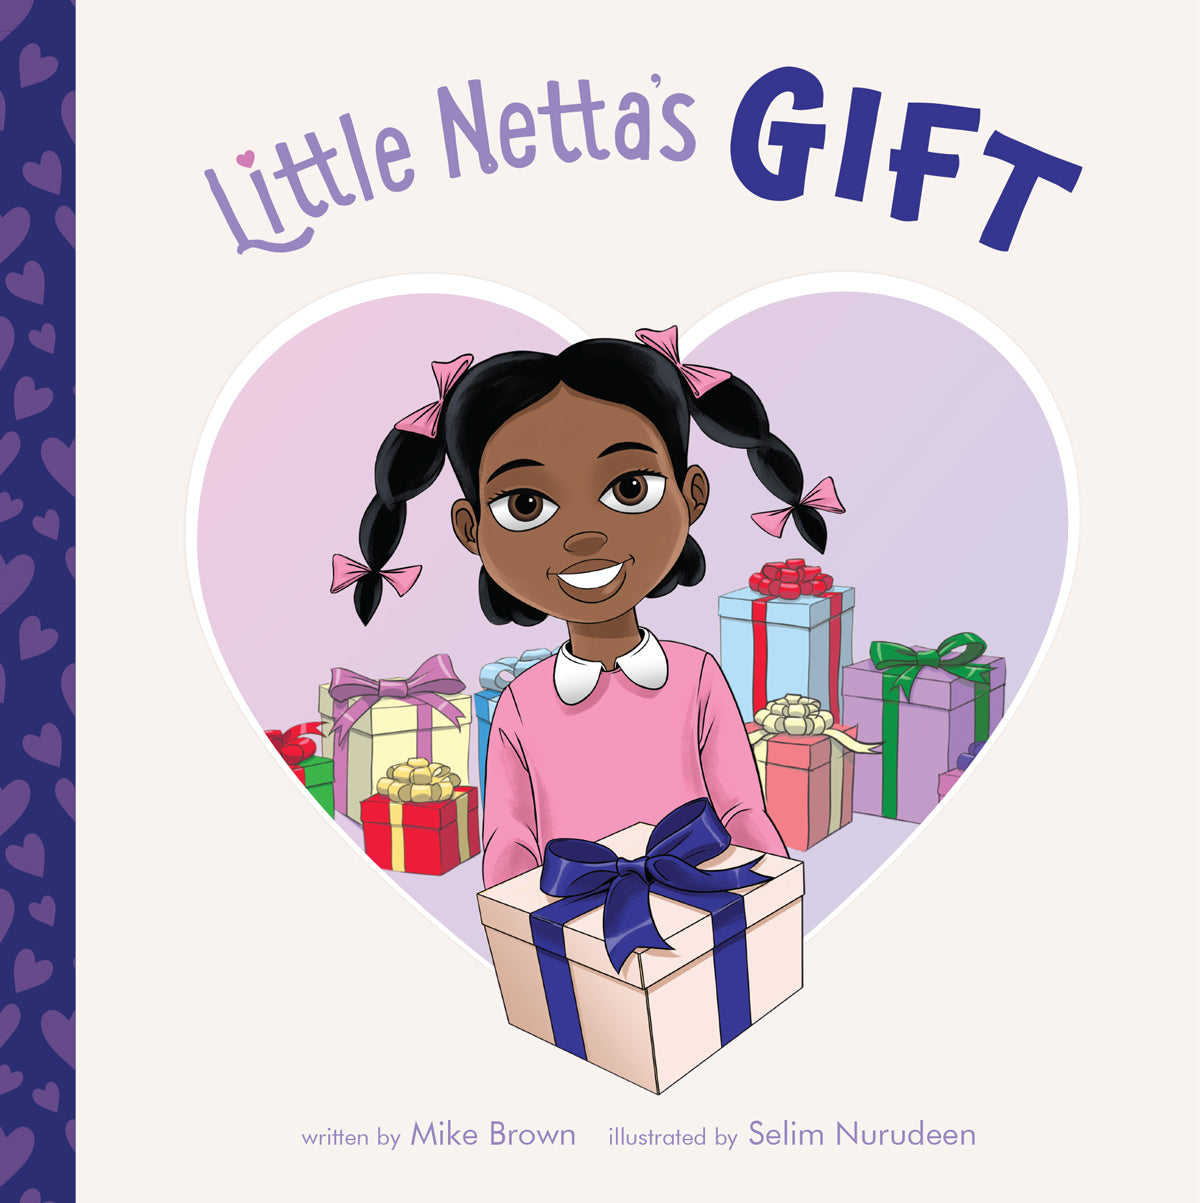 Little Netta's Gift